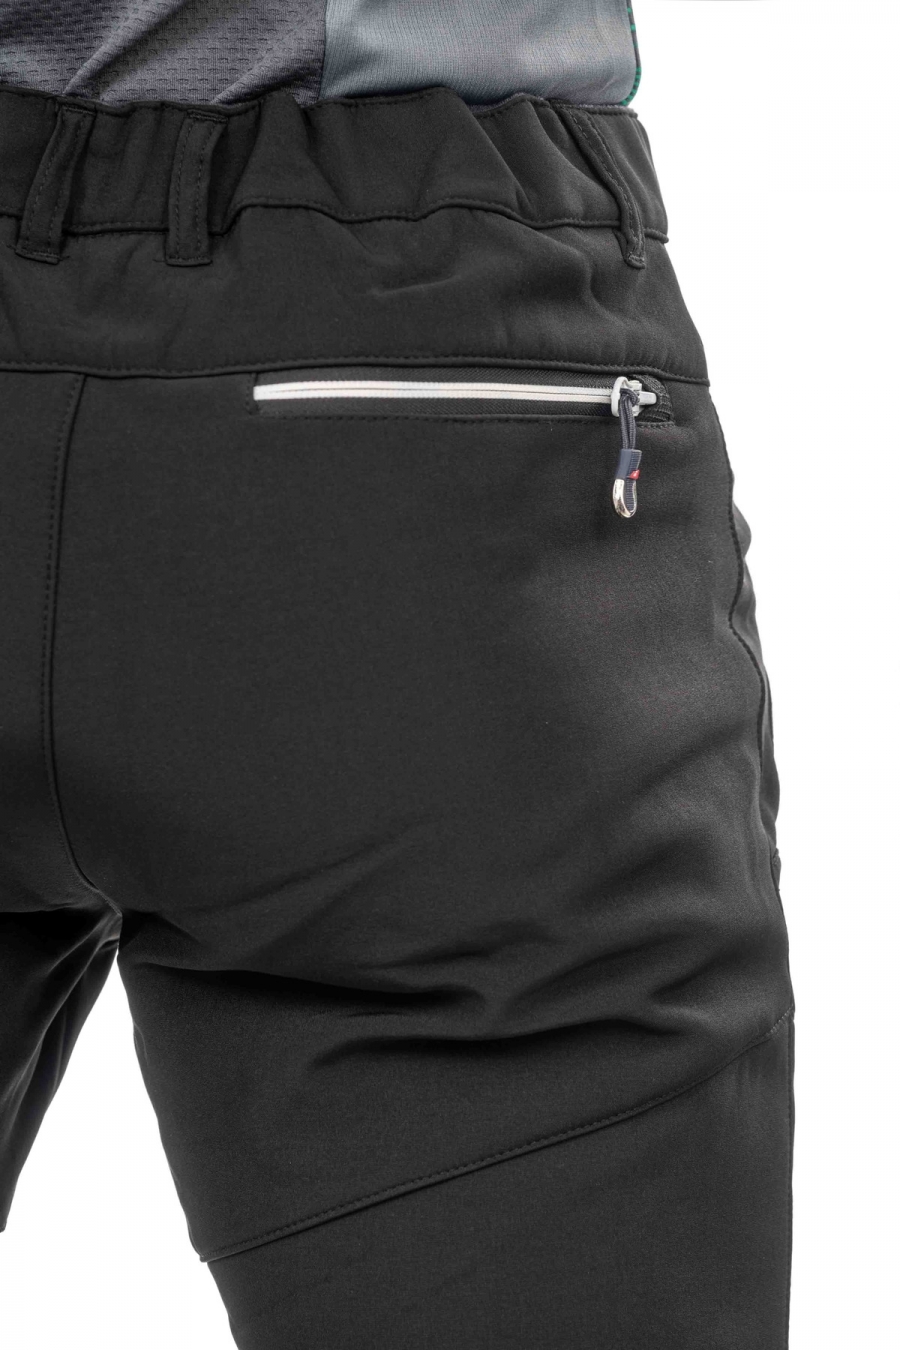 Pantalone Softshell 3 strati Impermeabile Antivento Stretch - Vellusar